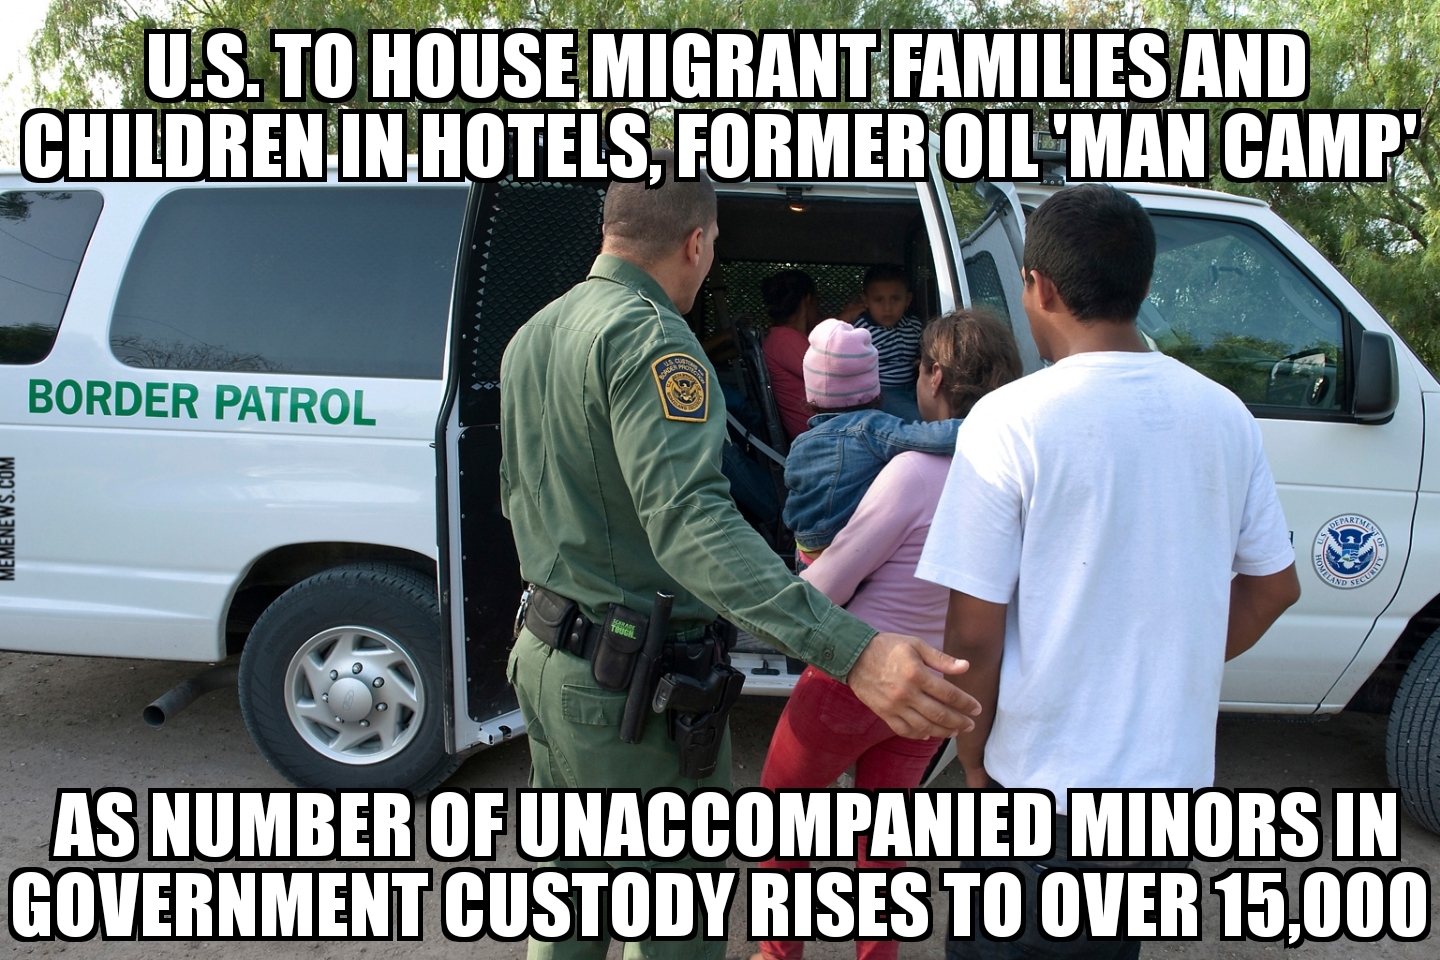 Unaccompanied minors in U.S. custody top 15k